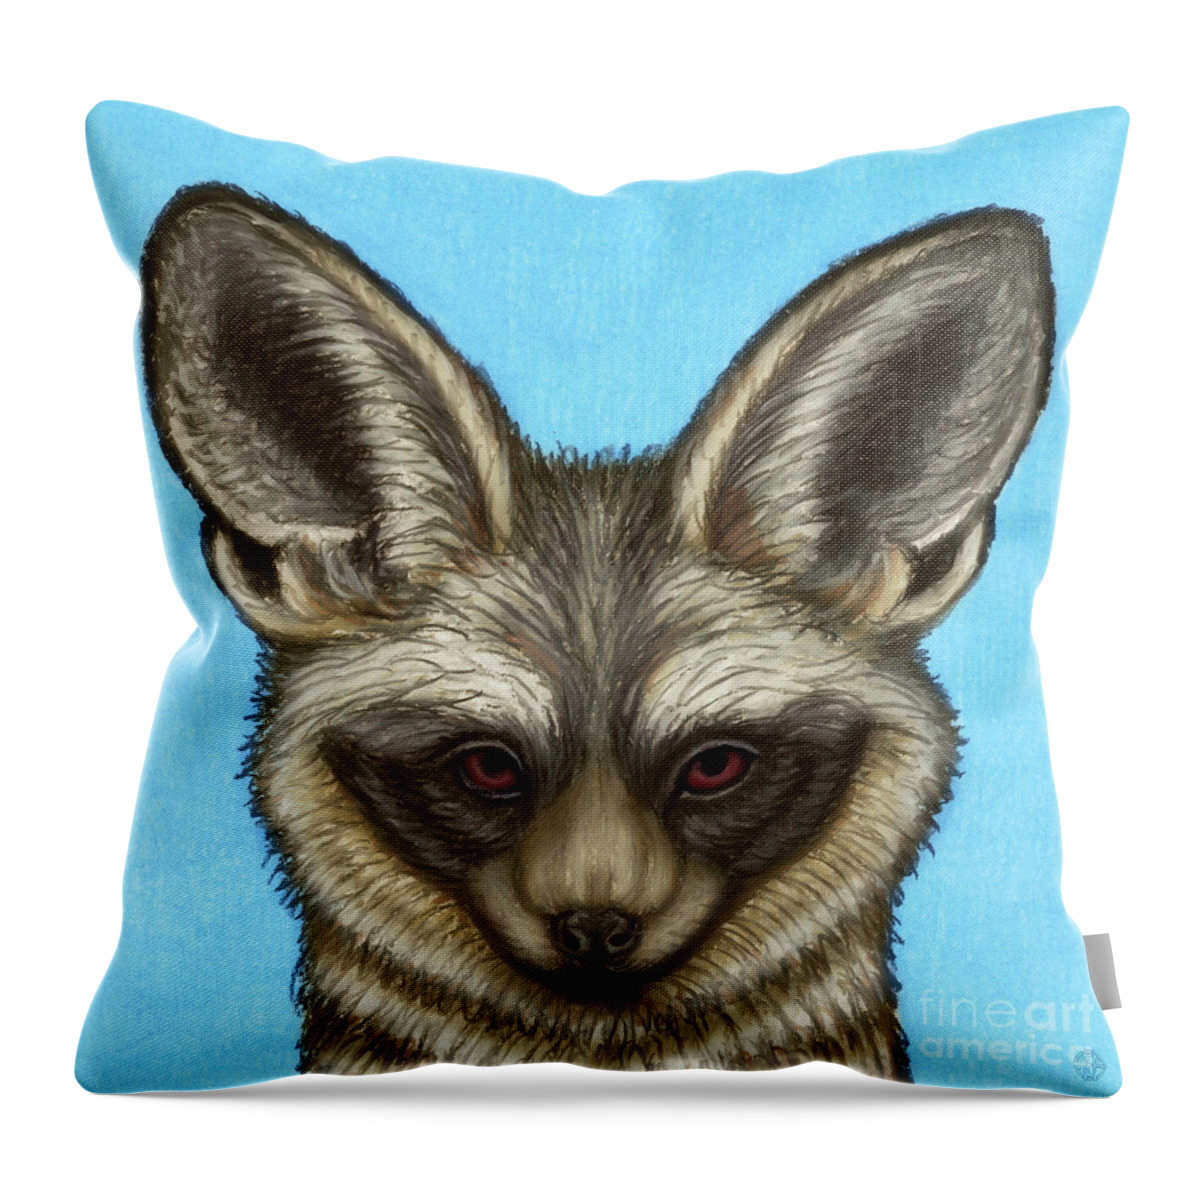 Bat Eared Fox Throw Pillow featuring the painting Bat Eared Fox by Amy E Fraser